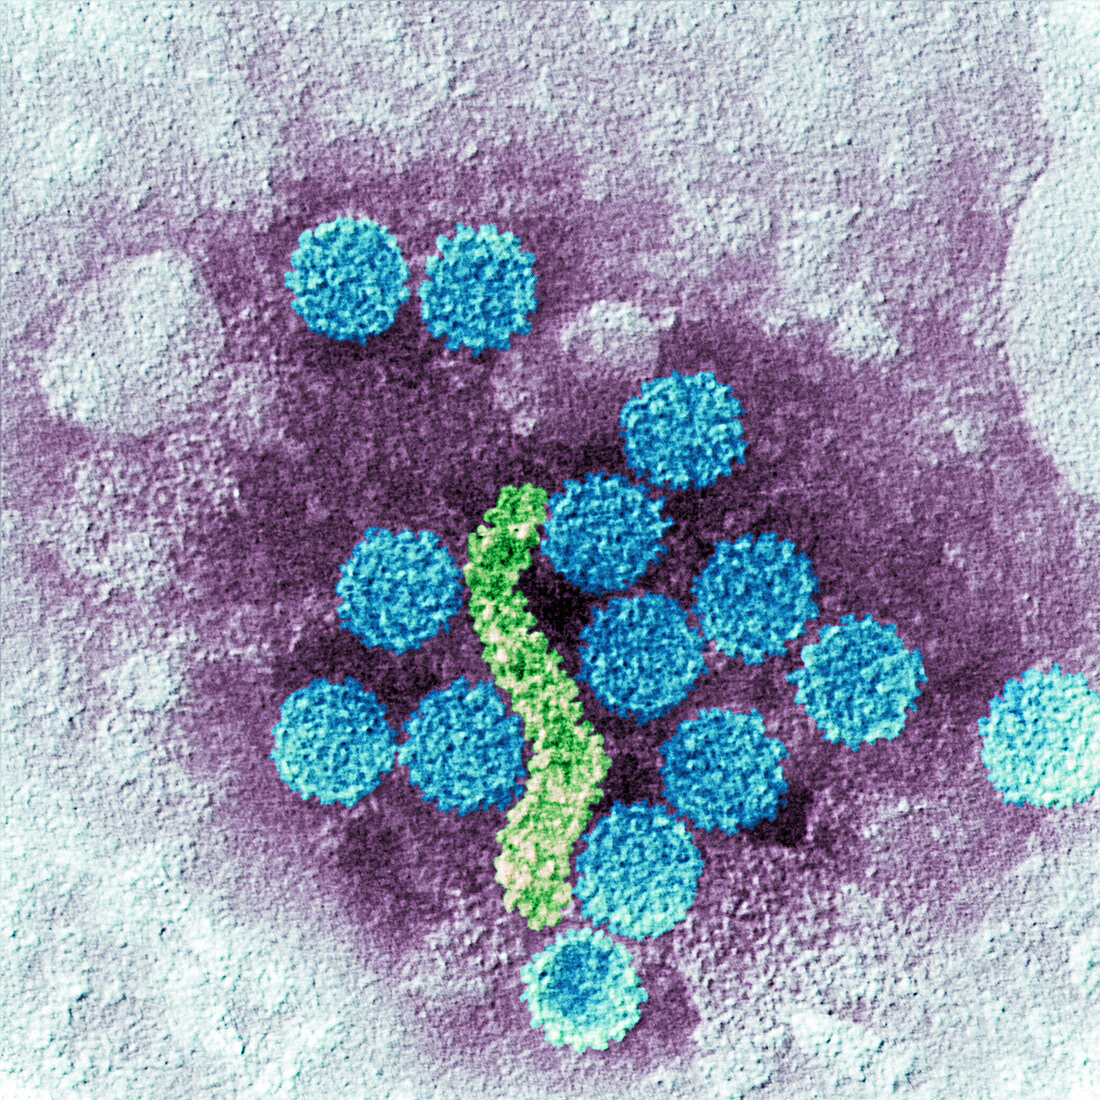 Papillomavirus virions, TEM